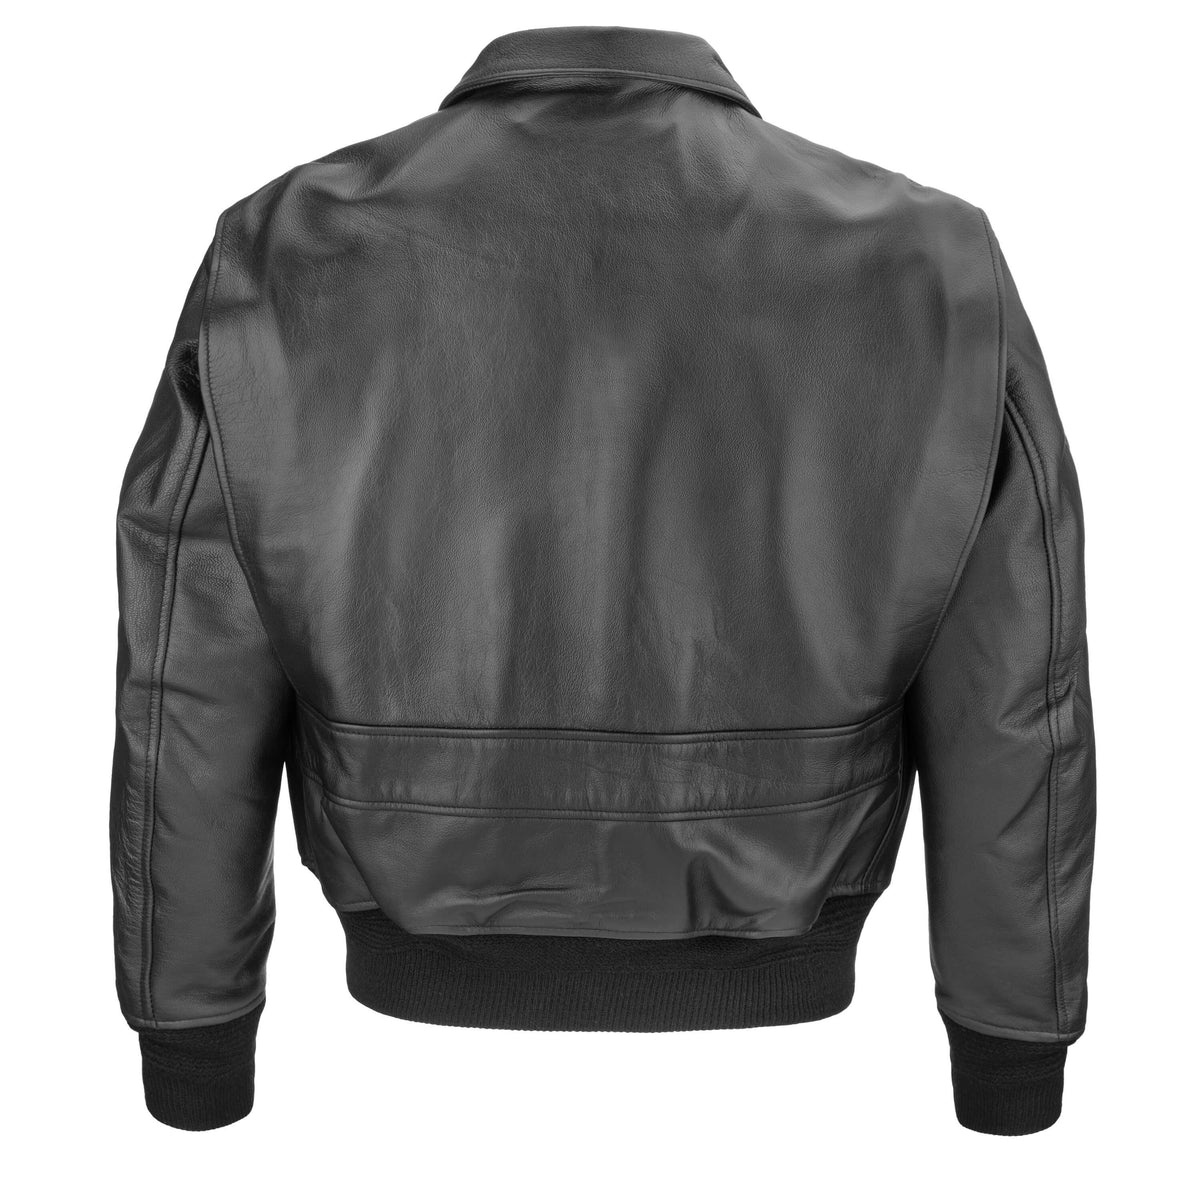 ANJ-3 Black Goatskin Leather Bomber Jacket – Taylor's Leatherwear, Inc.